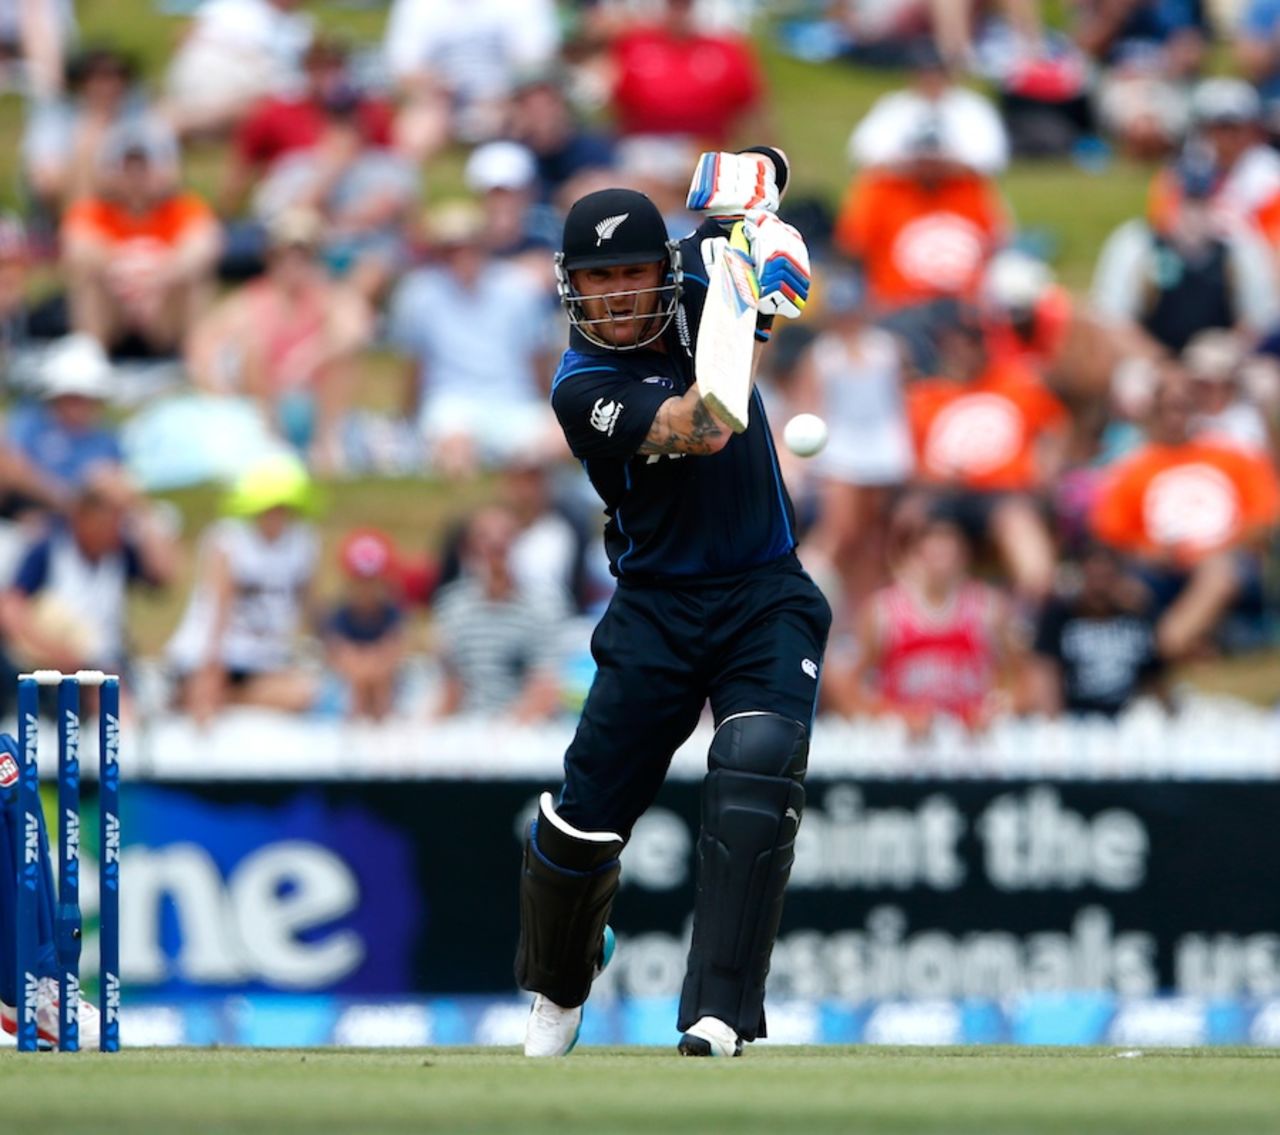 Brendon McCullum got New Zealand off to a brisk start, New Zealand v Sri Lanka, 2nd ODI, Hamilton, January 15, 2015